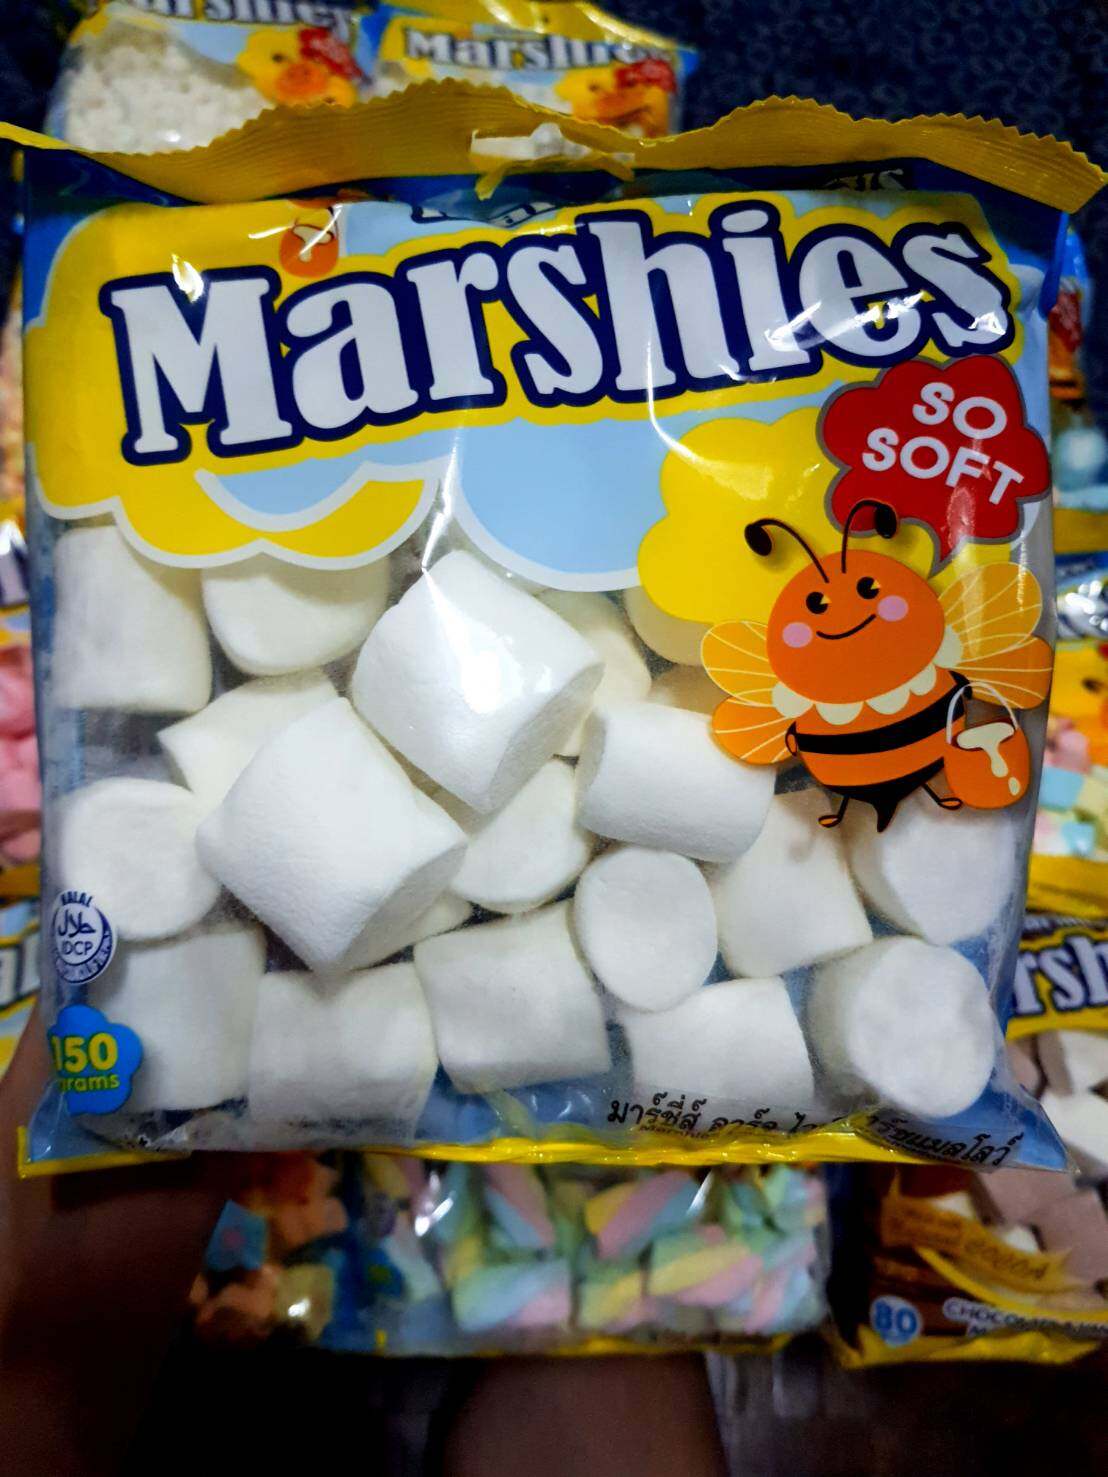 Marshmellow มาร์ชเมลโล่ เม็ดใหญ่ สีขาว Marshies | Lazada.co.th